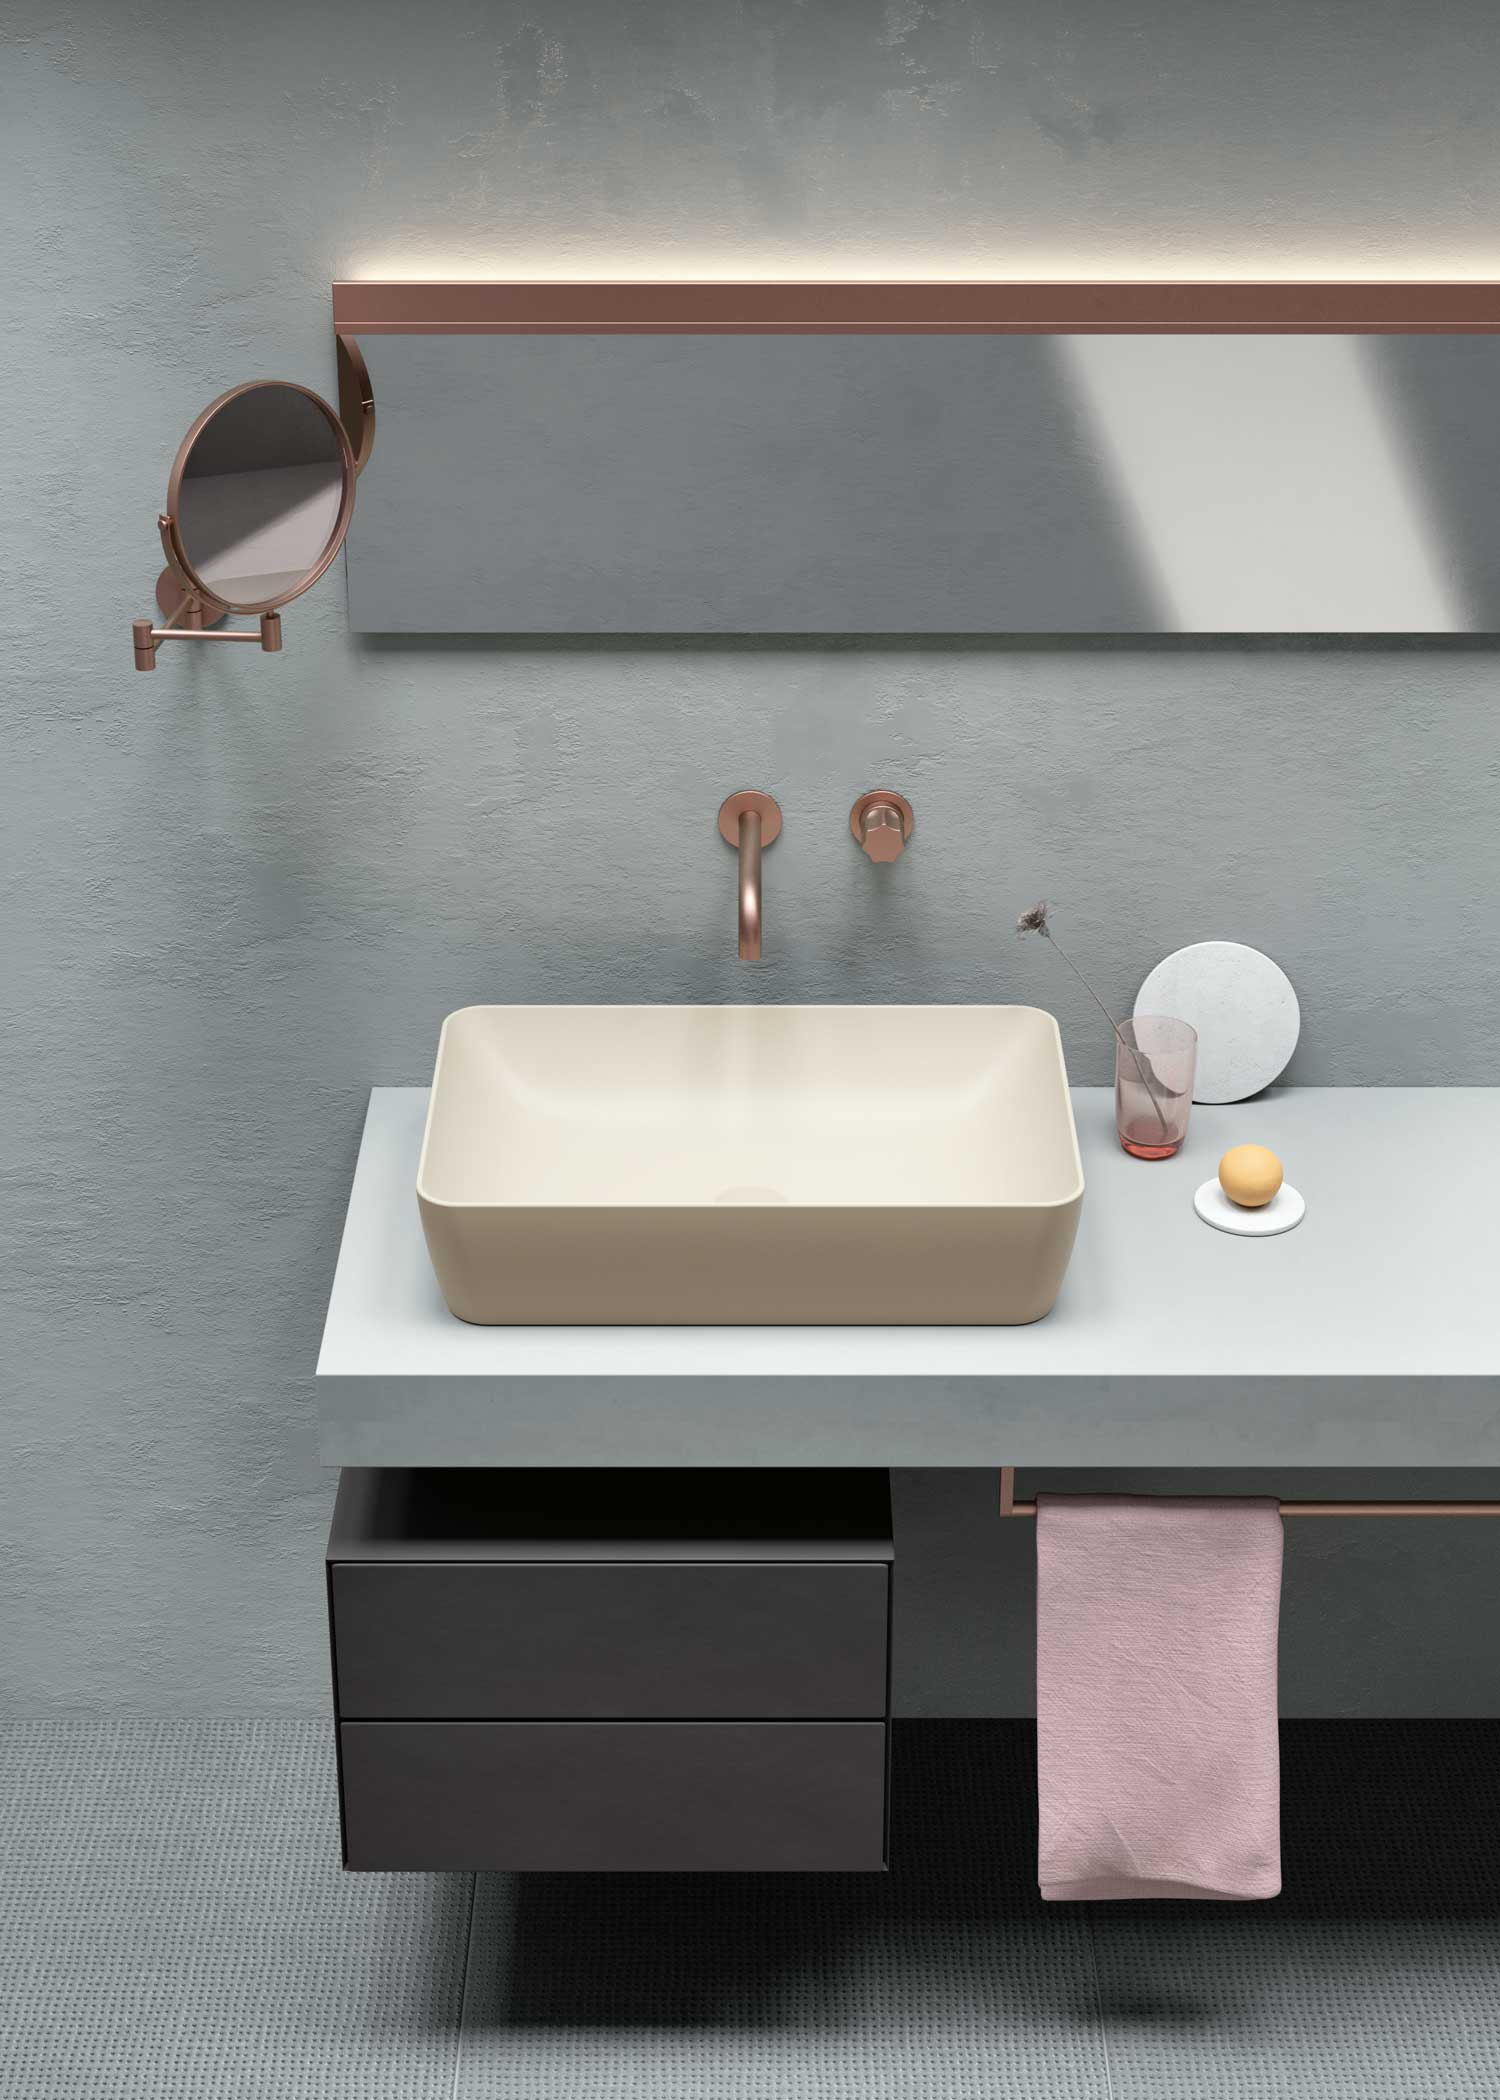 interior design solutions for small bathrooms, micro bathrooms